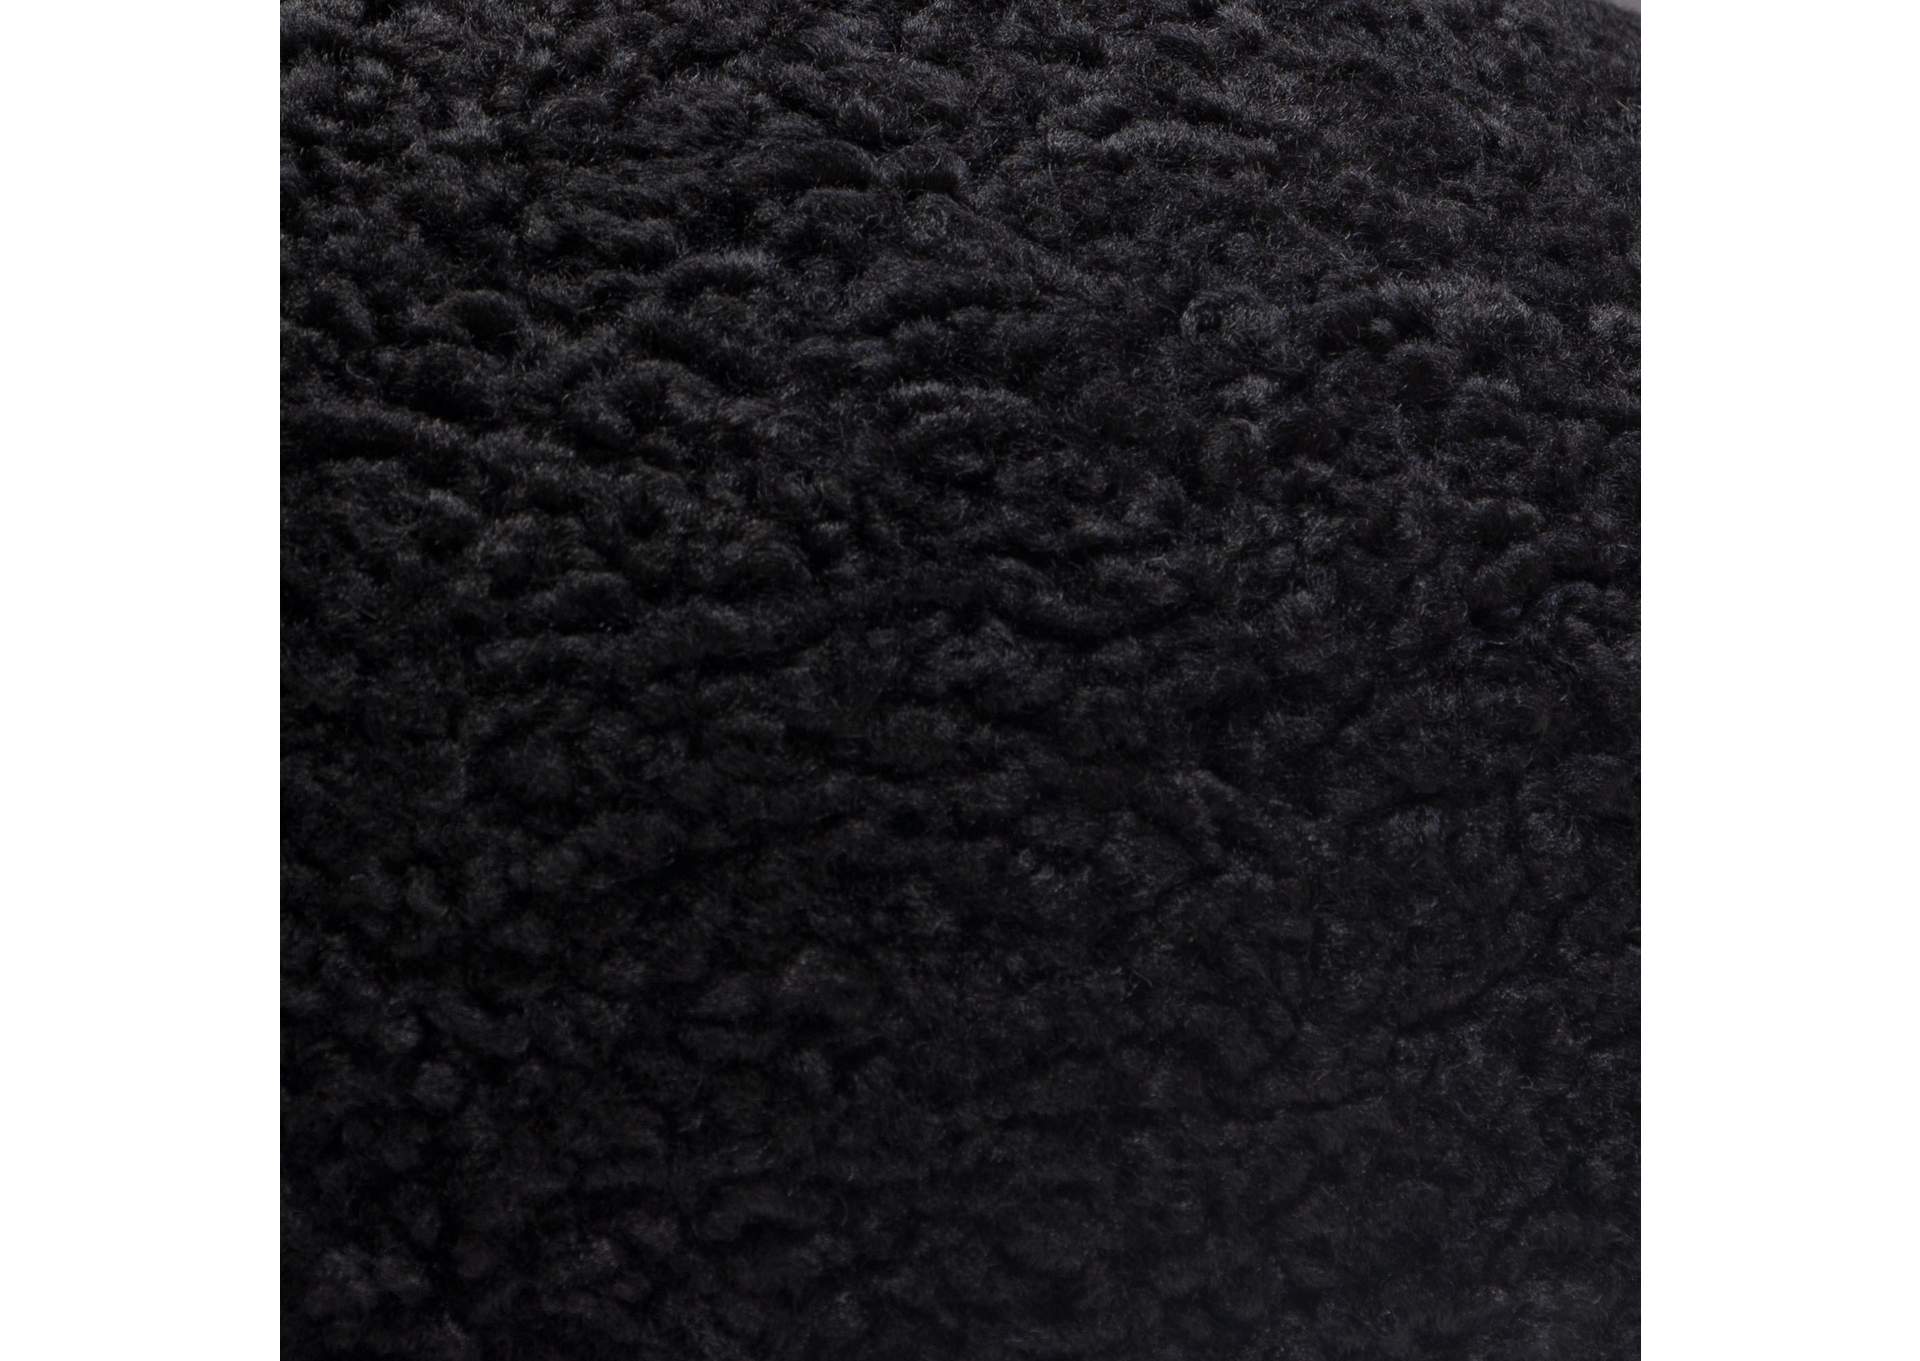 Set of (2) 10" Round Accent Pillows in Black Faux Sheepskin by Diamond Sofa,Diamond Sofa